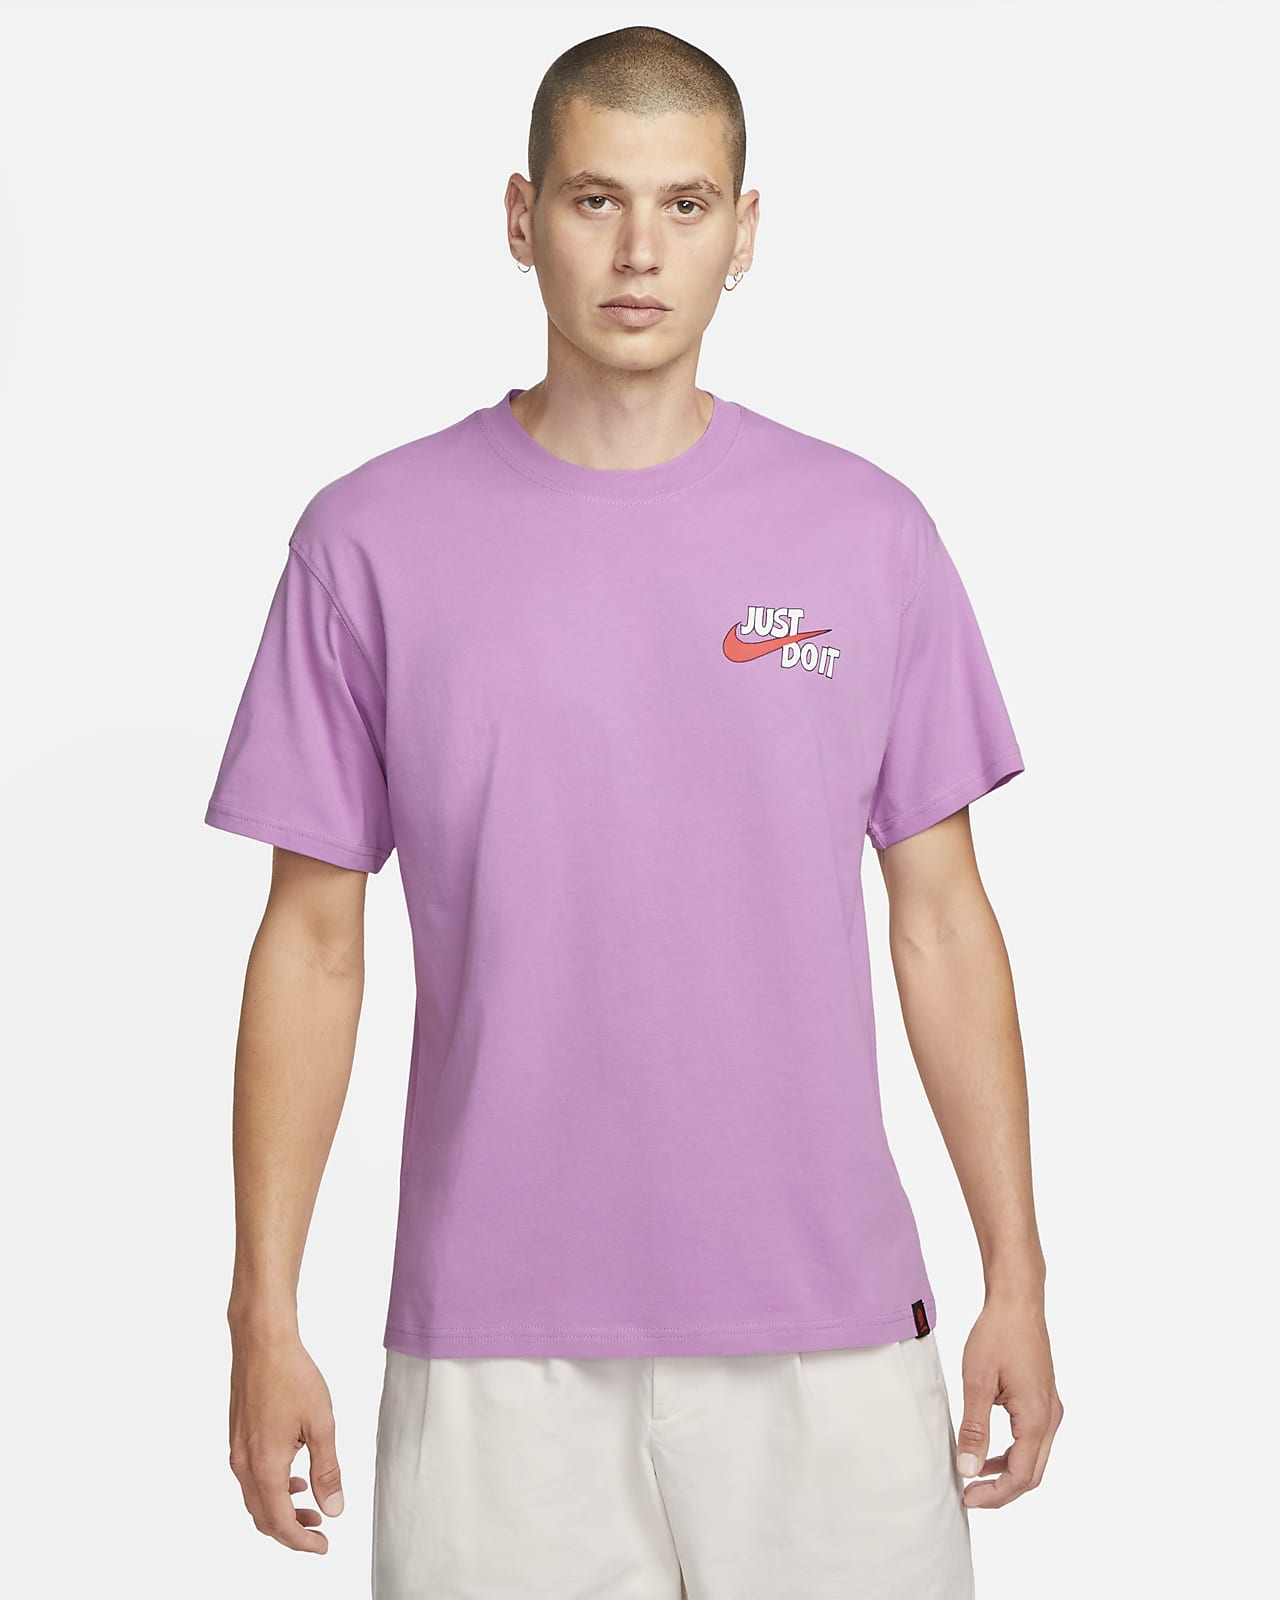 Nike Max90 Men's Long-Sleeve Basketball T-Shirt.